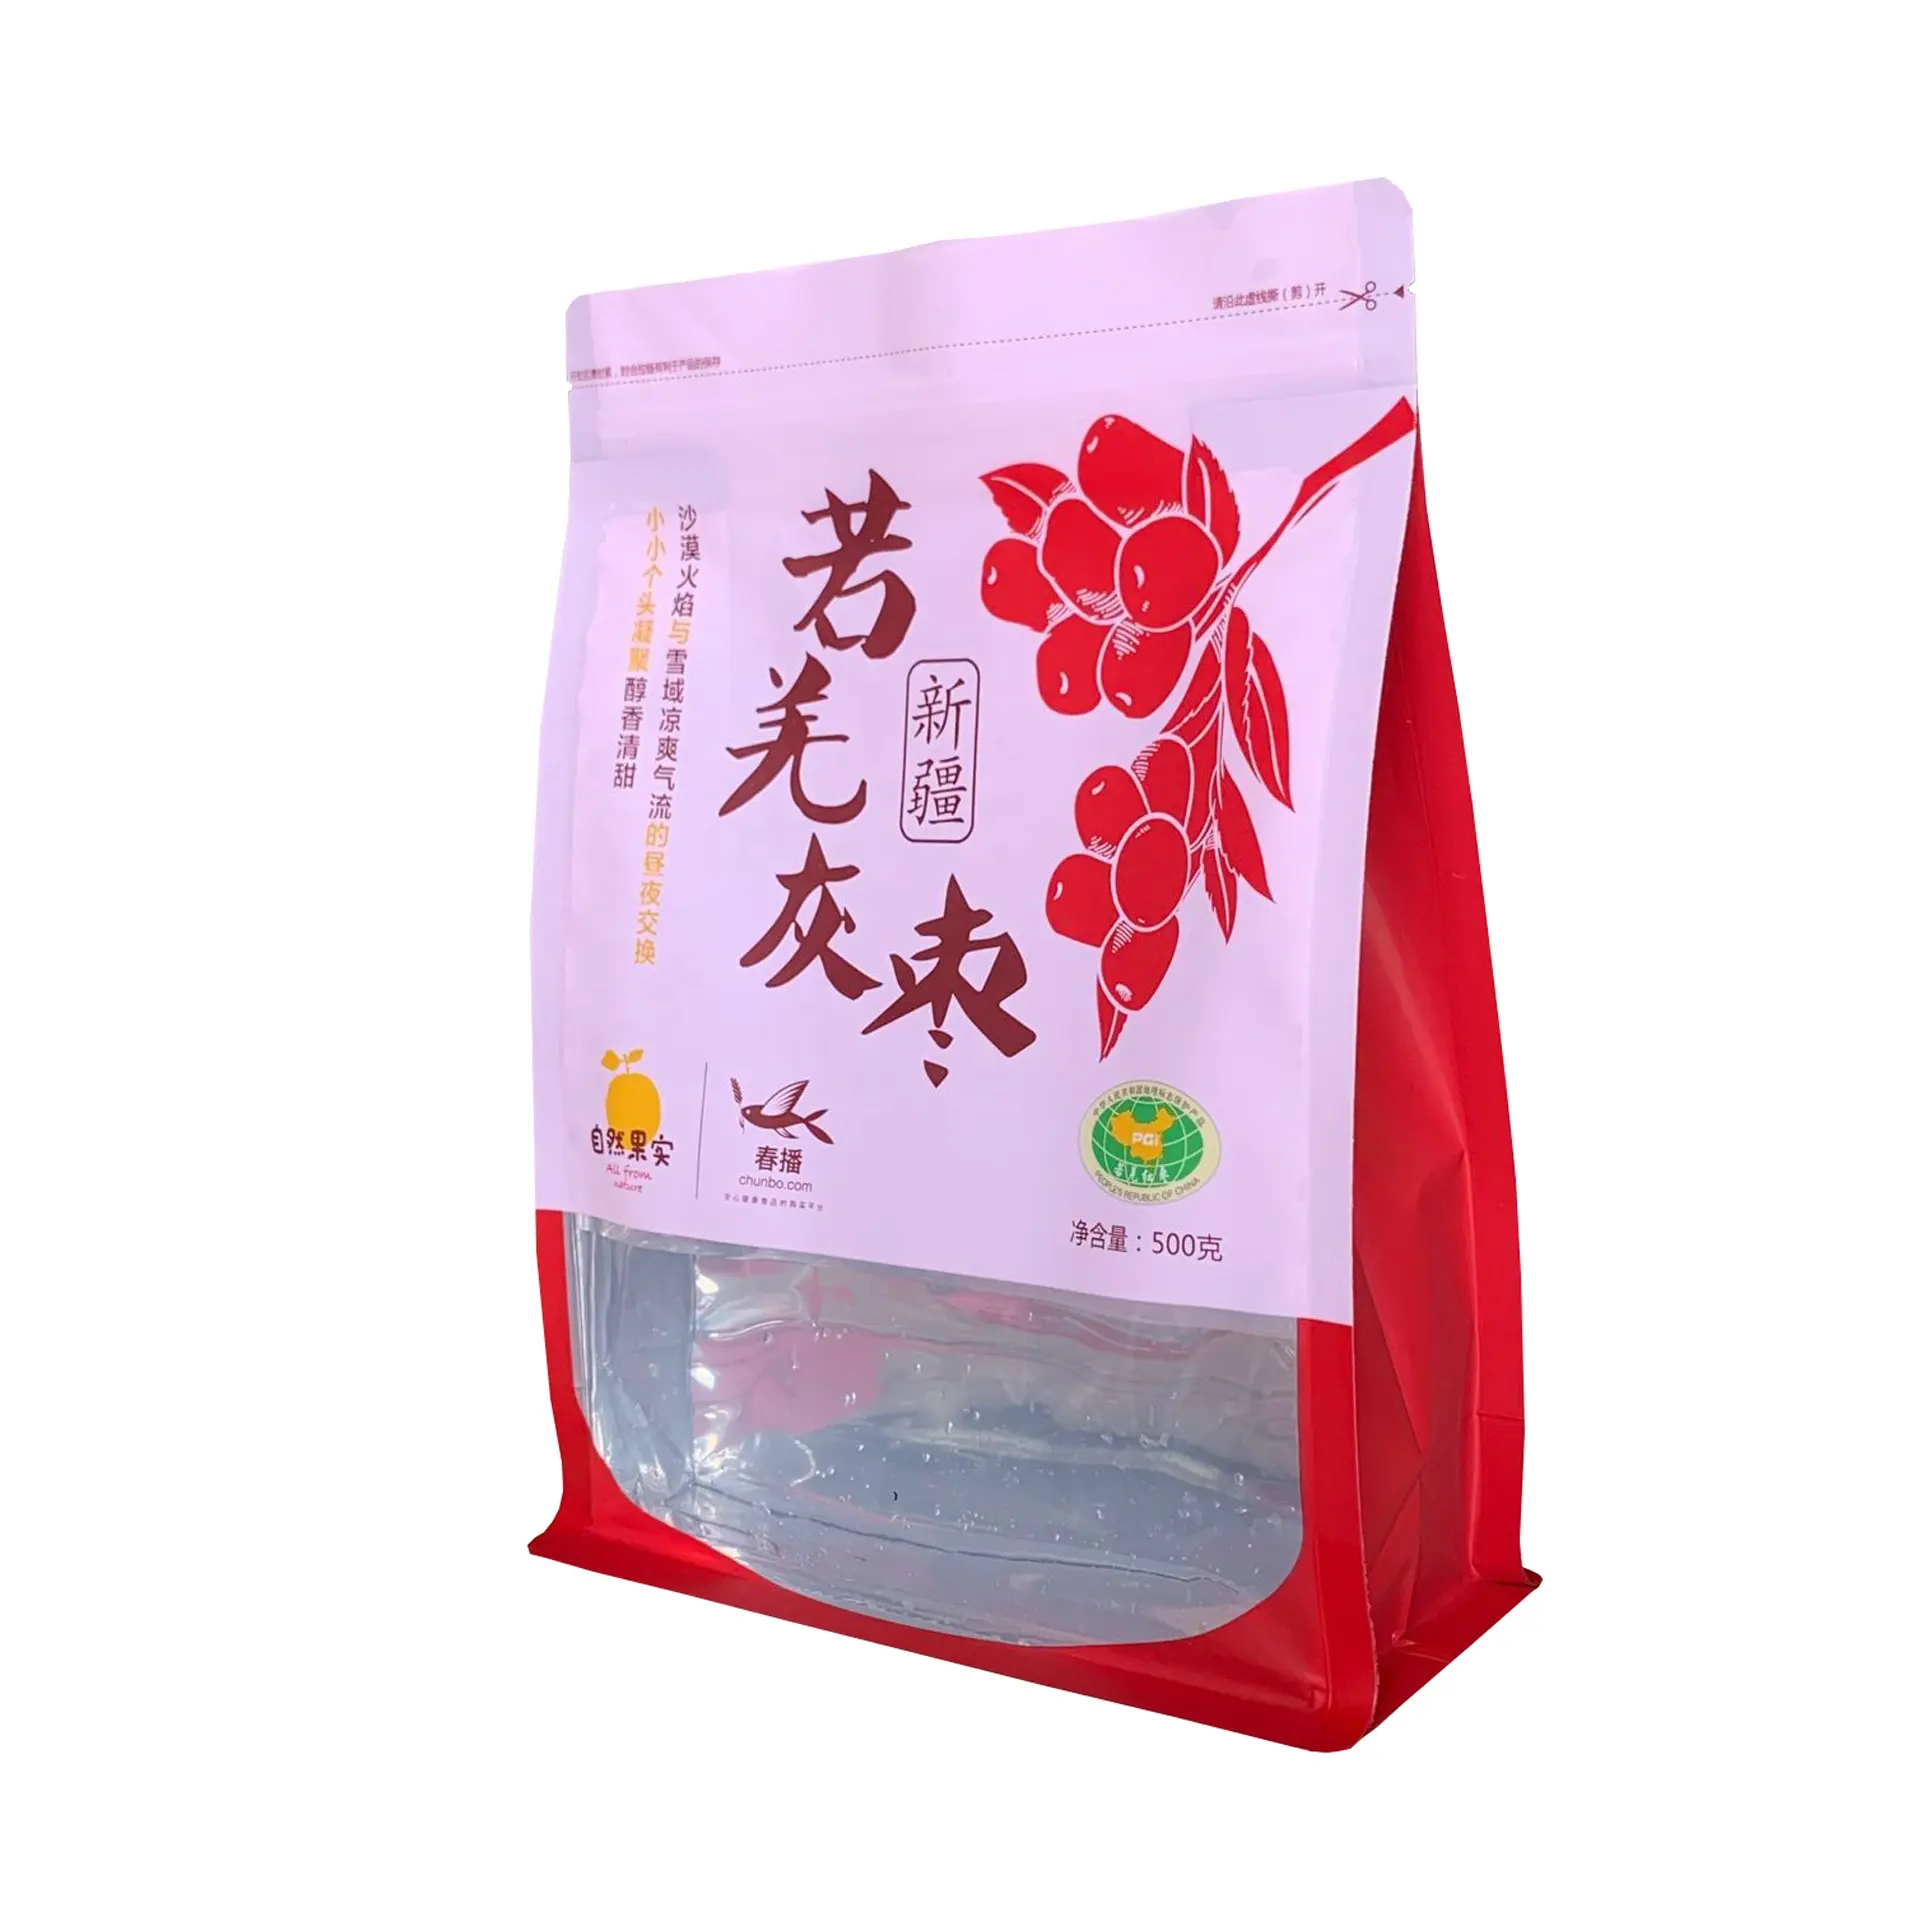 500g Resealable Aluminum Foil Plastic Quad Seal Goji Berry / Red Dates / Mushroom / Cornmeal Ziplock Plastic Bag For Dried Food